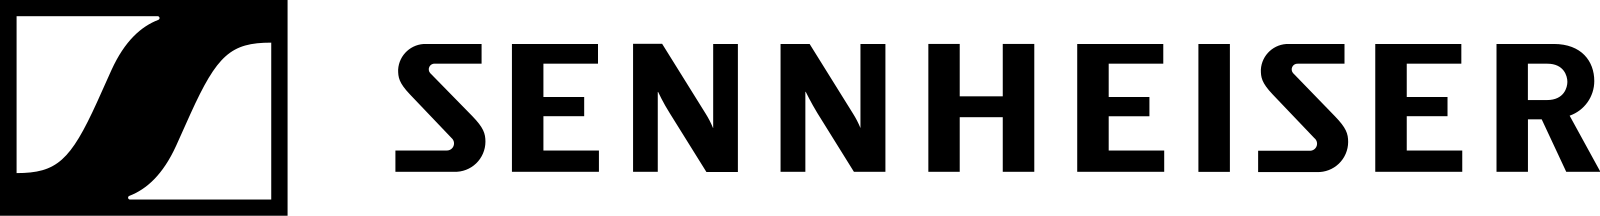 1600px-Sennheiser_logo_(2019).svg